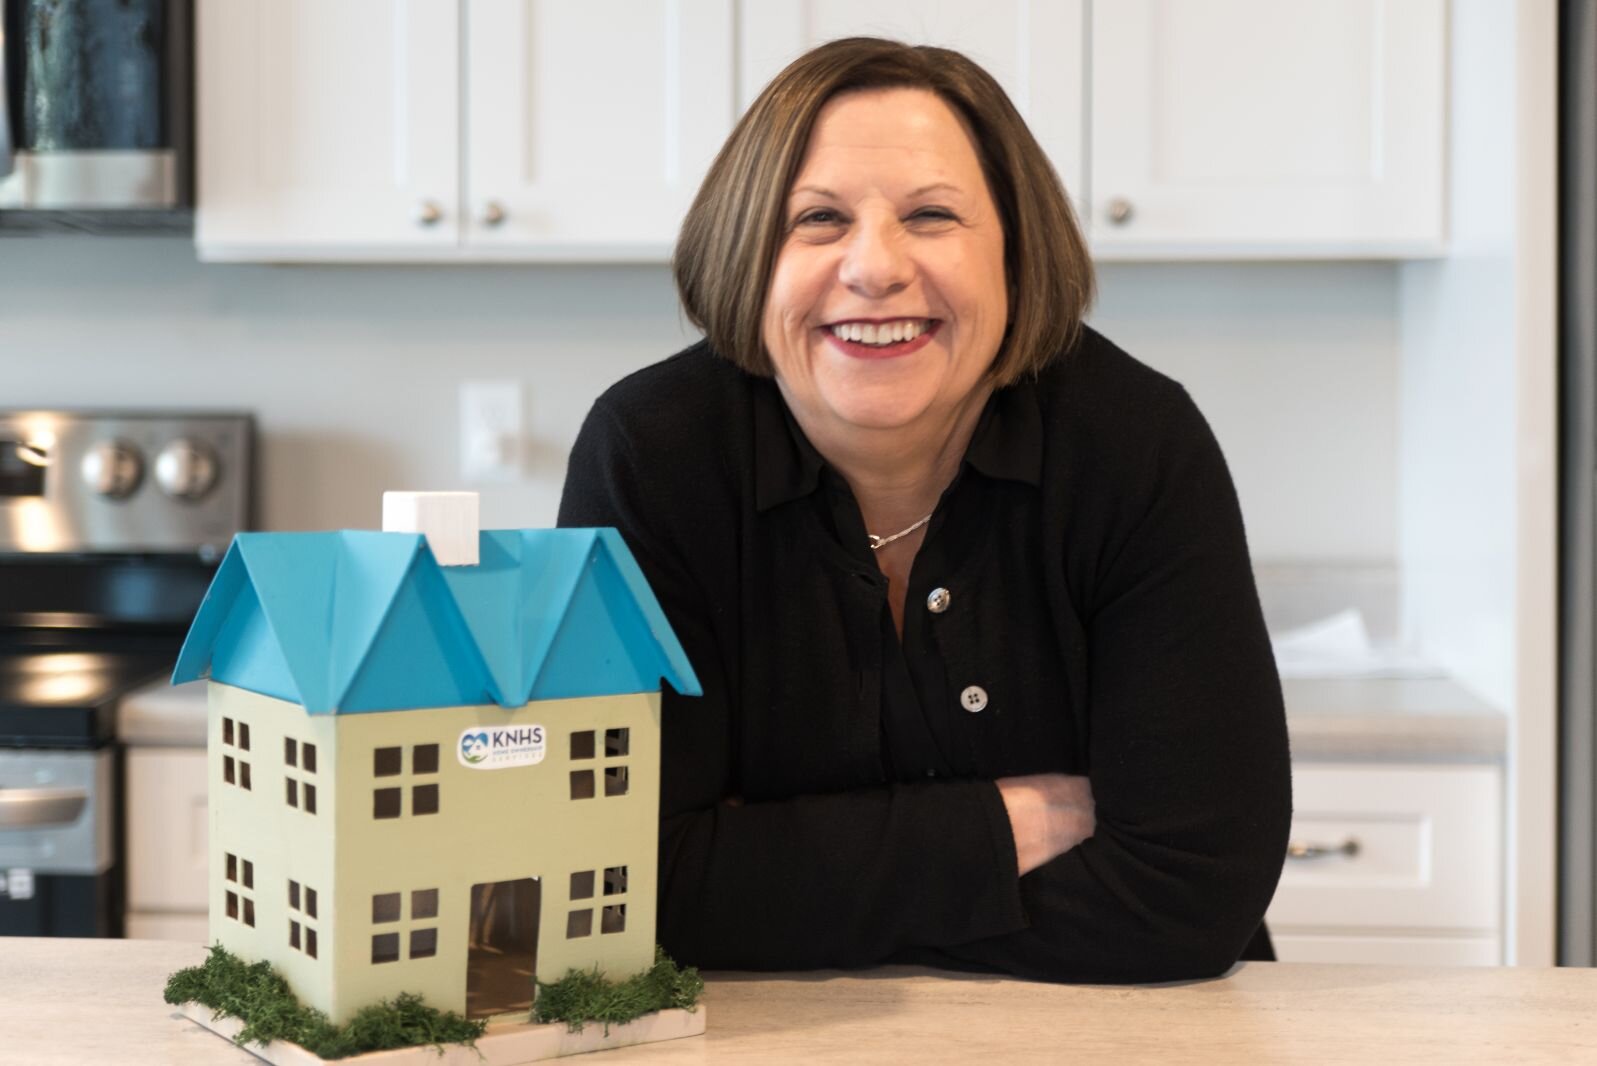 Beth McCann is the new Kalamazoo Neighborhood Housing Services Executive Director.